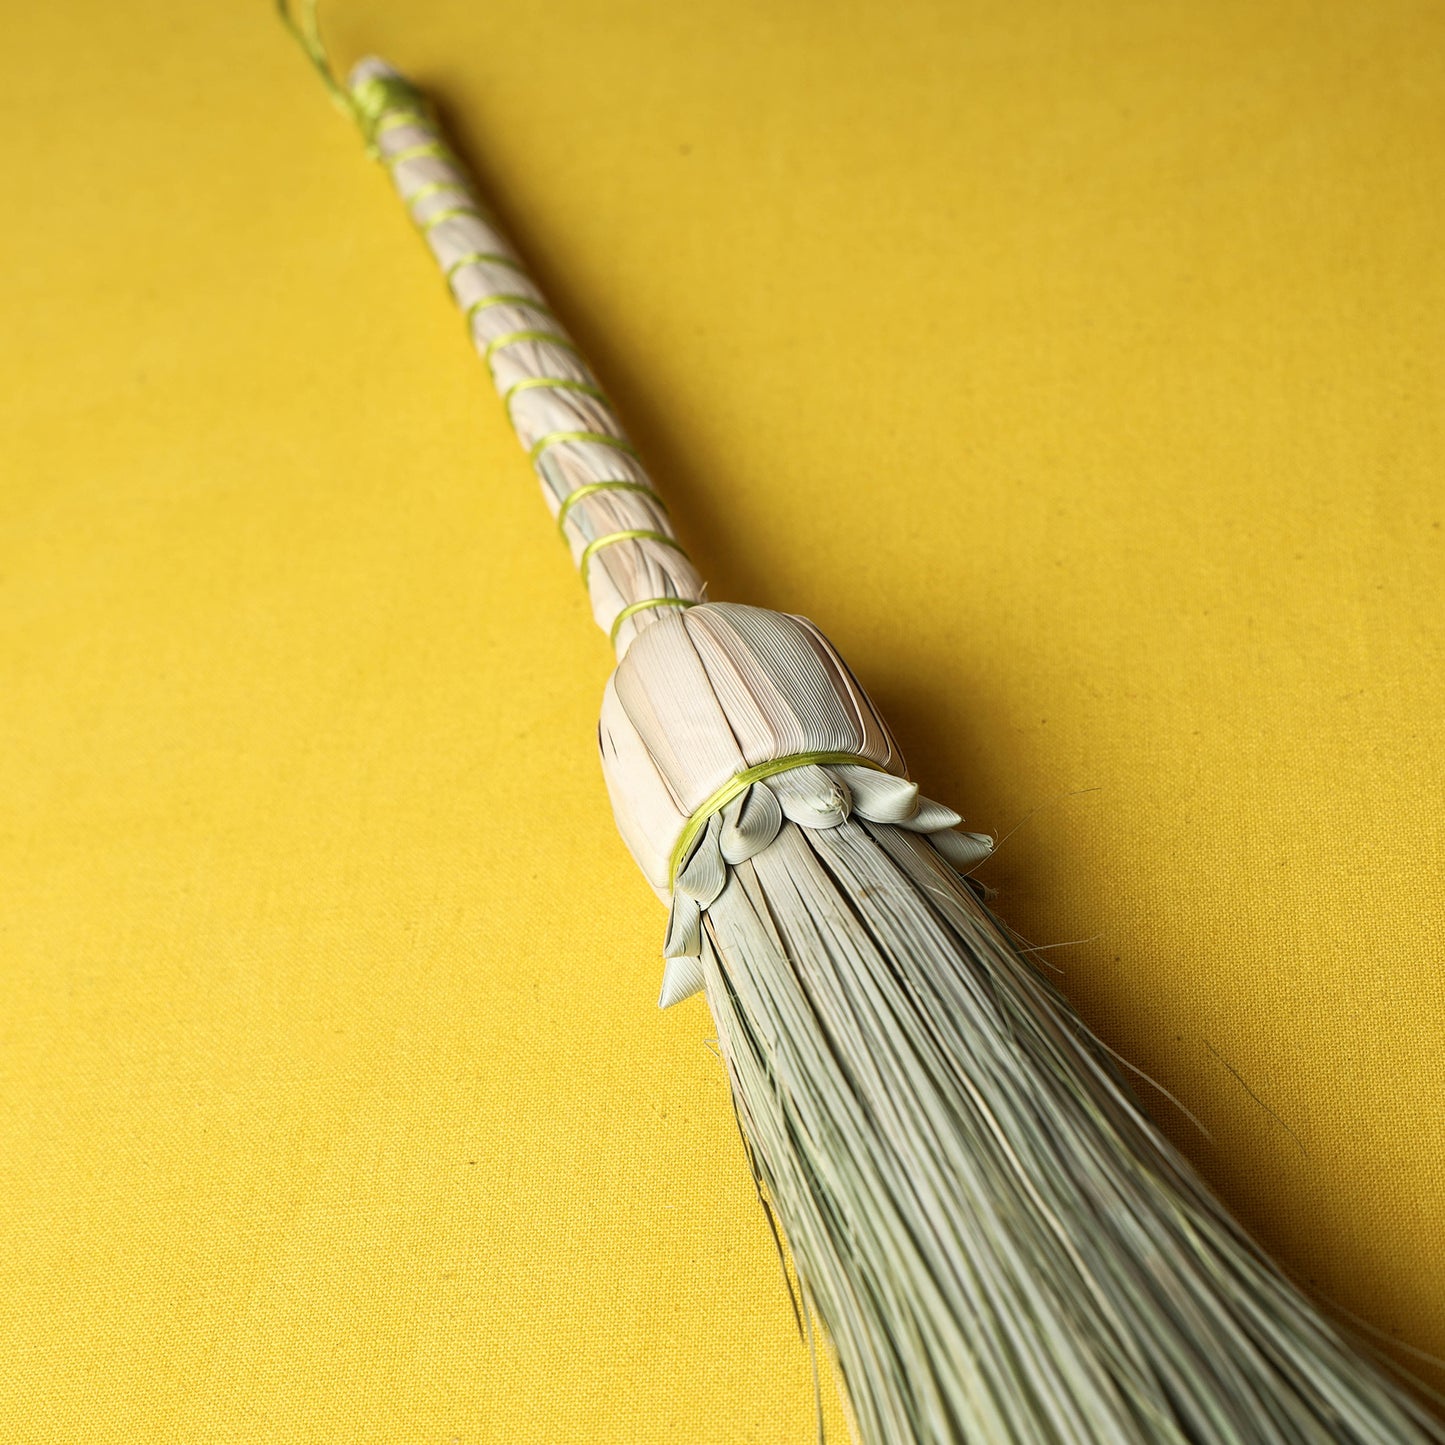 खजुरी Handmade Multipurpose Date-Palm Leaves Broom/Computer Brush